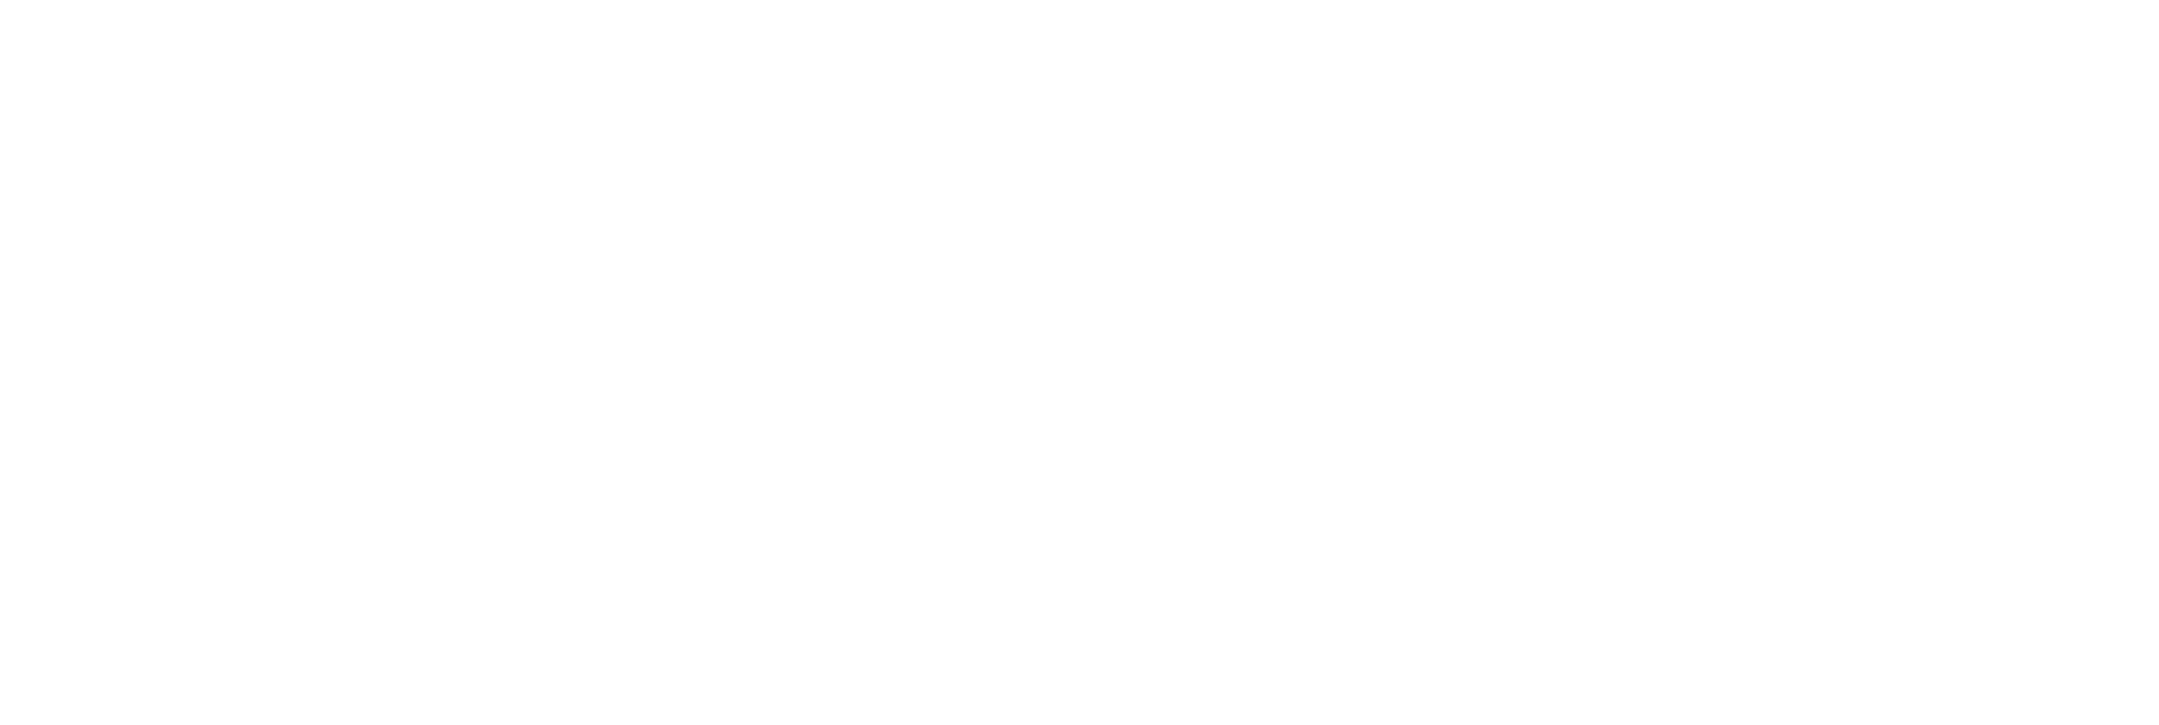 Kilmainham Gaol Books & Gifts